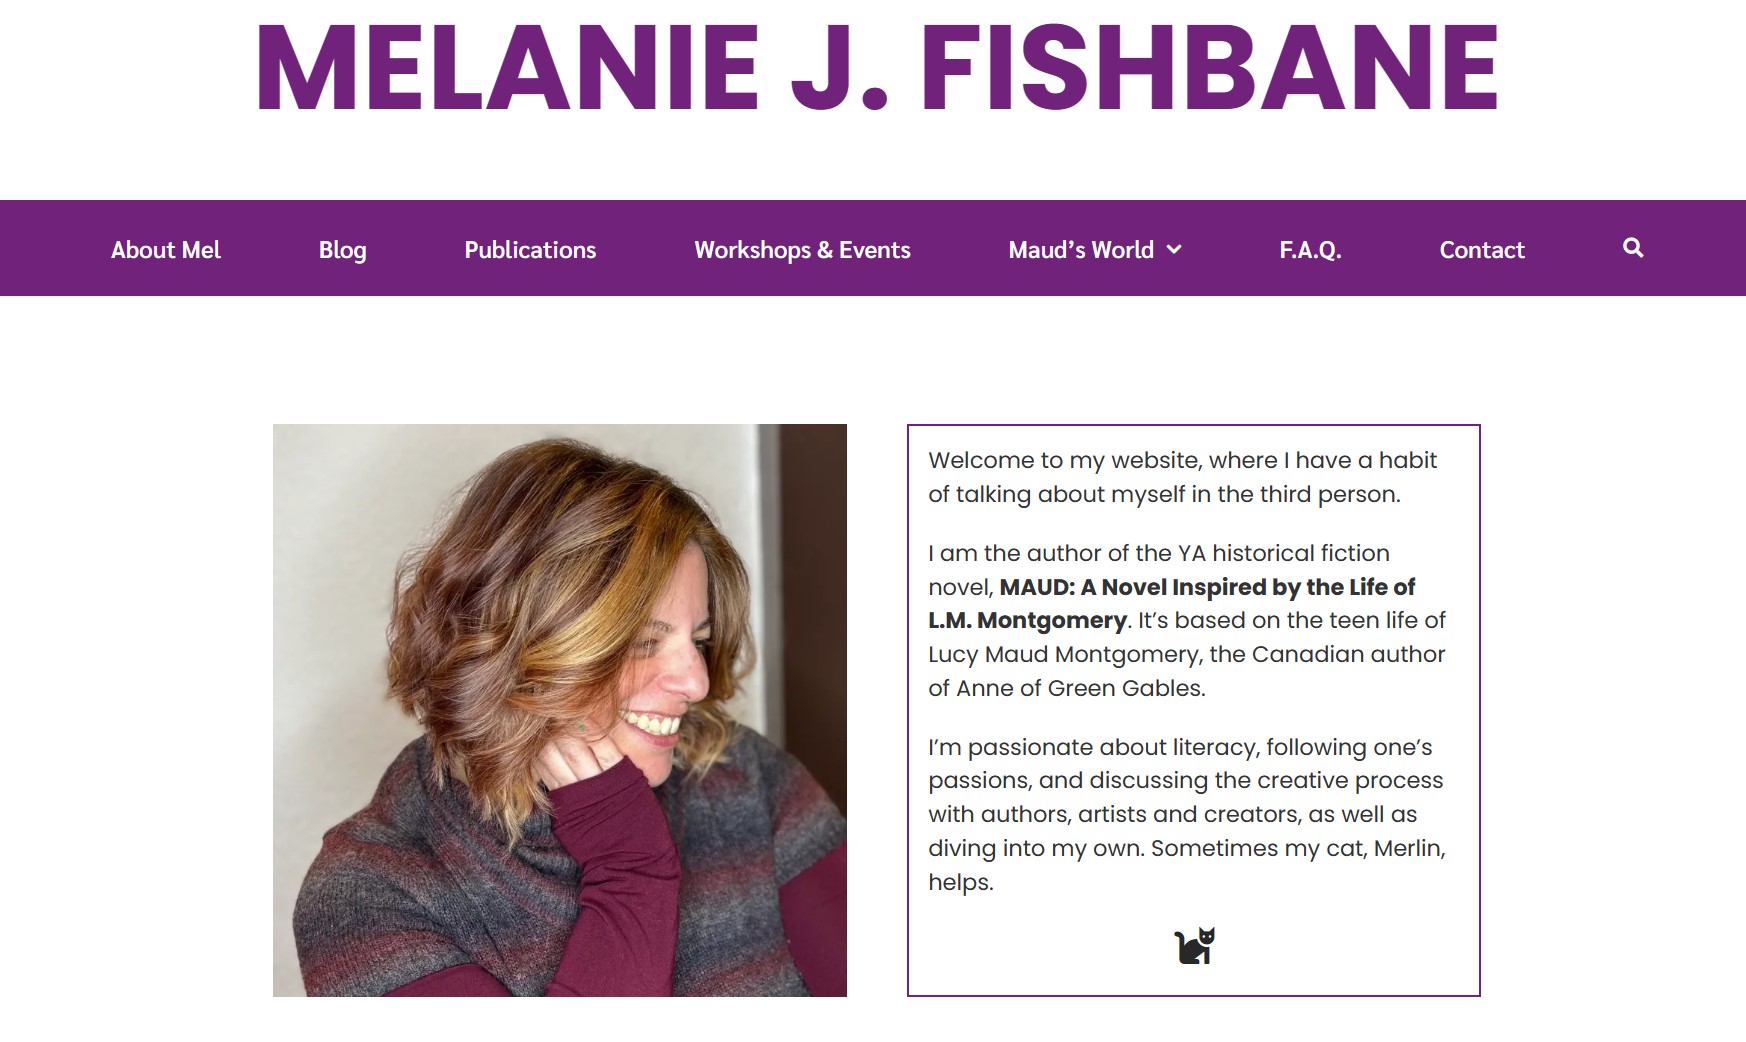 Melanie Fishbane website with simple design, purple menu, and author portrait of Melanie